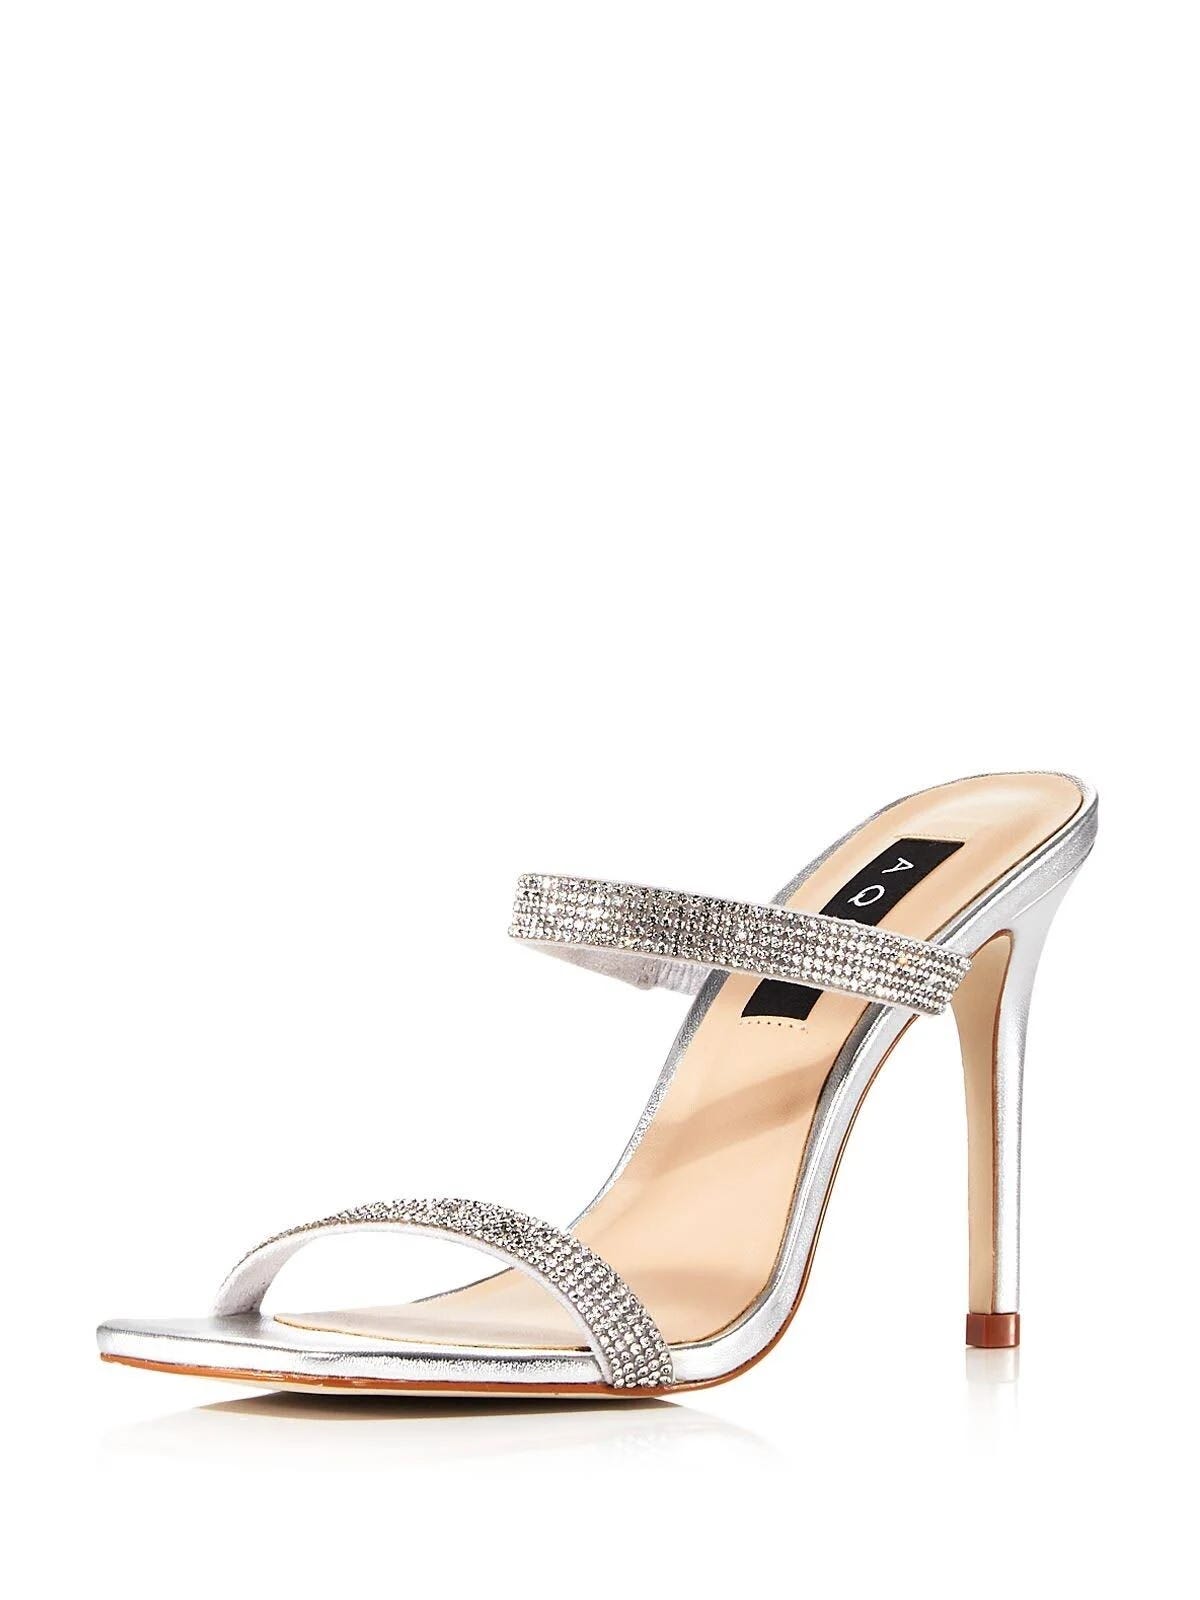 Silver Stiletto Slip-On Dress Shoes by Aqua | Image